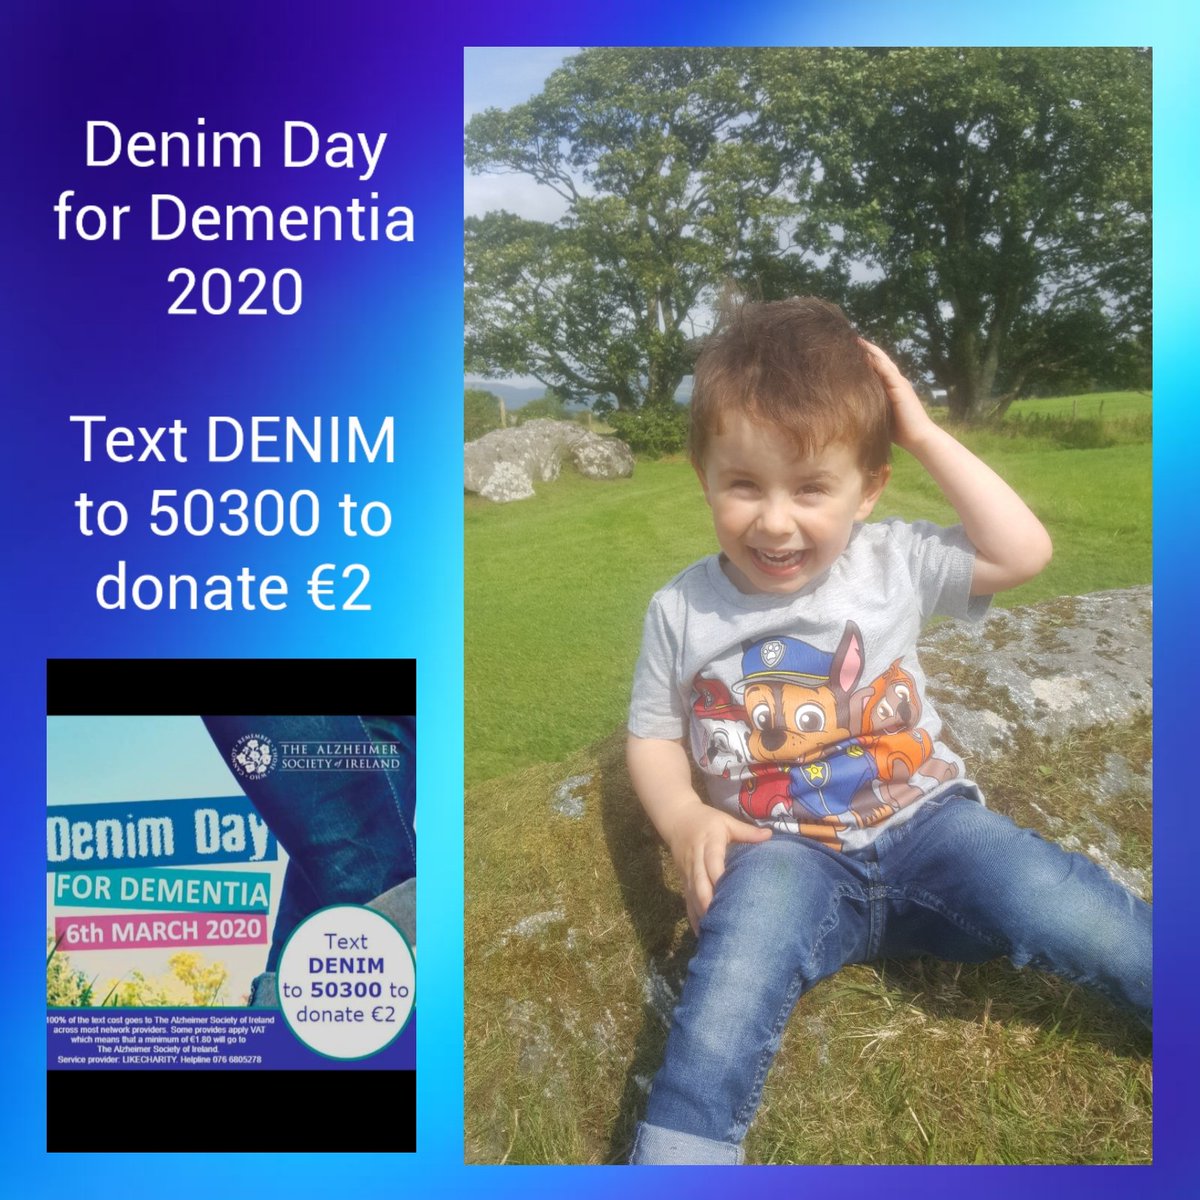 Matthew in his denims for the @alzheimersocirl #denimday4dementia #dementiasupports